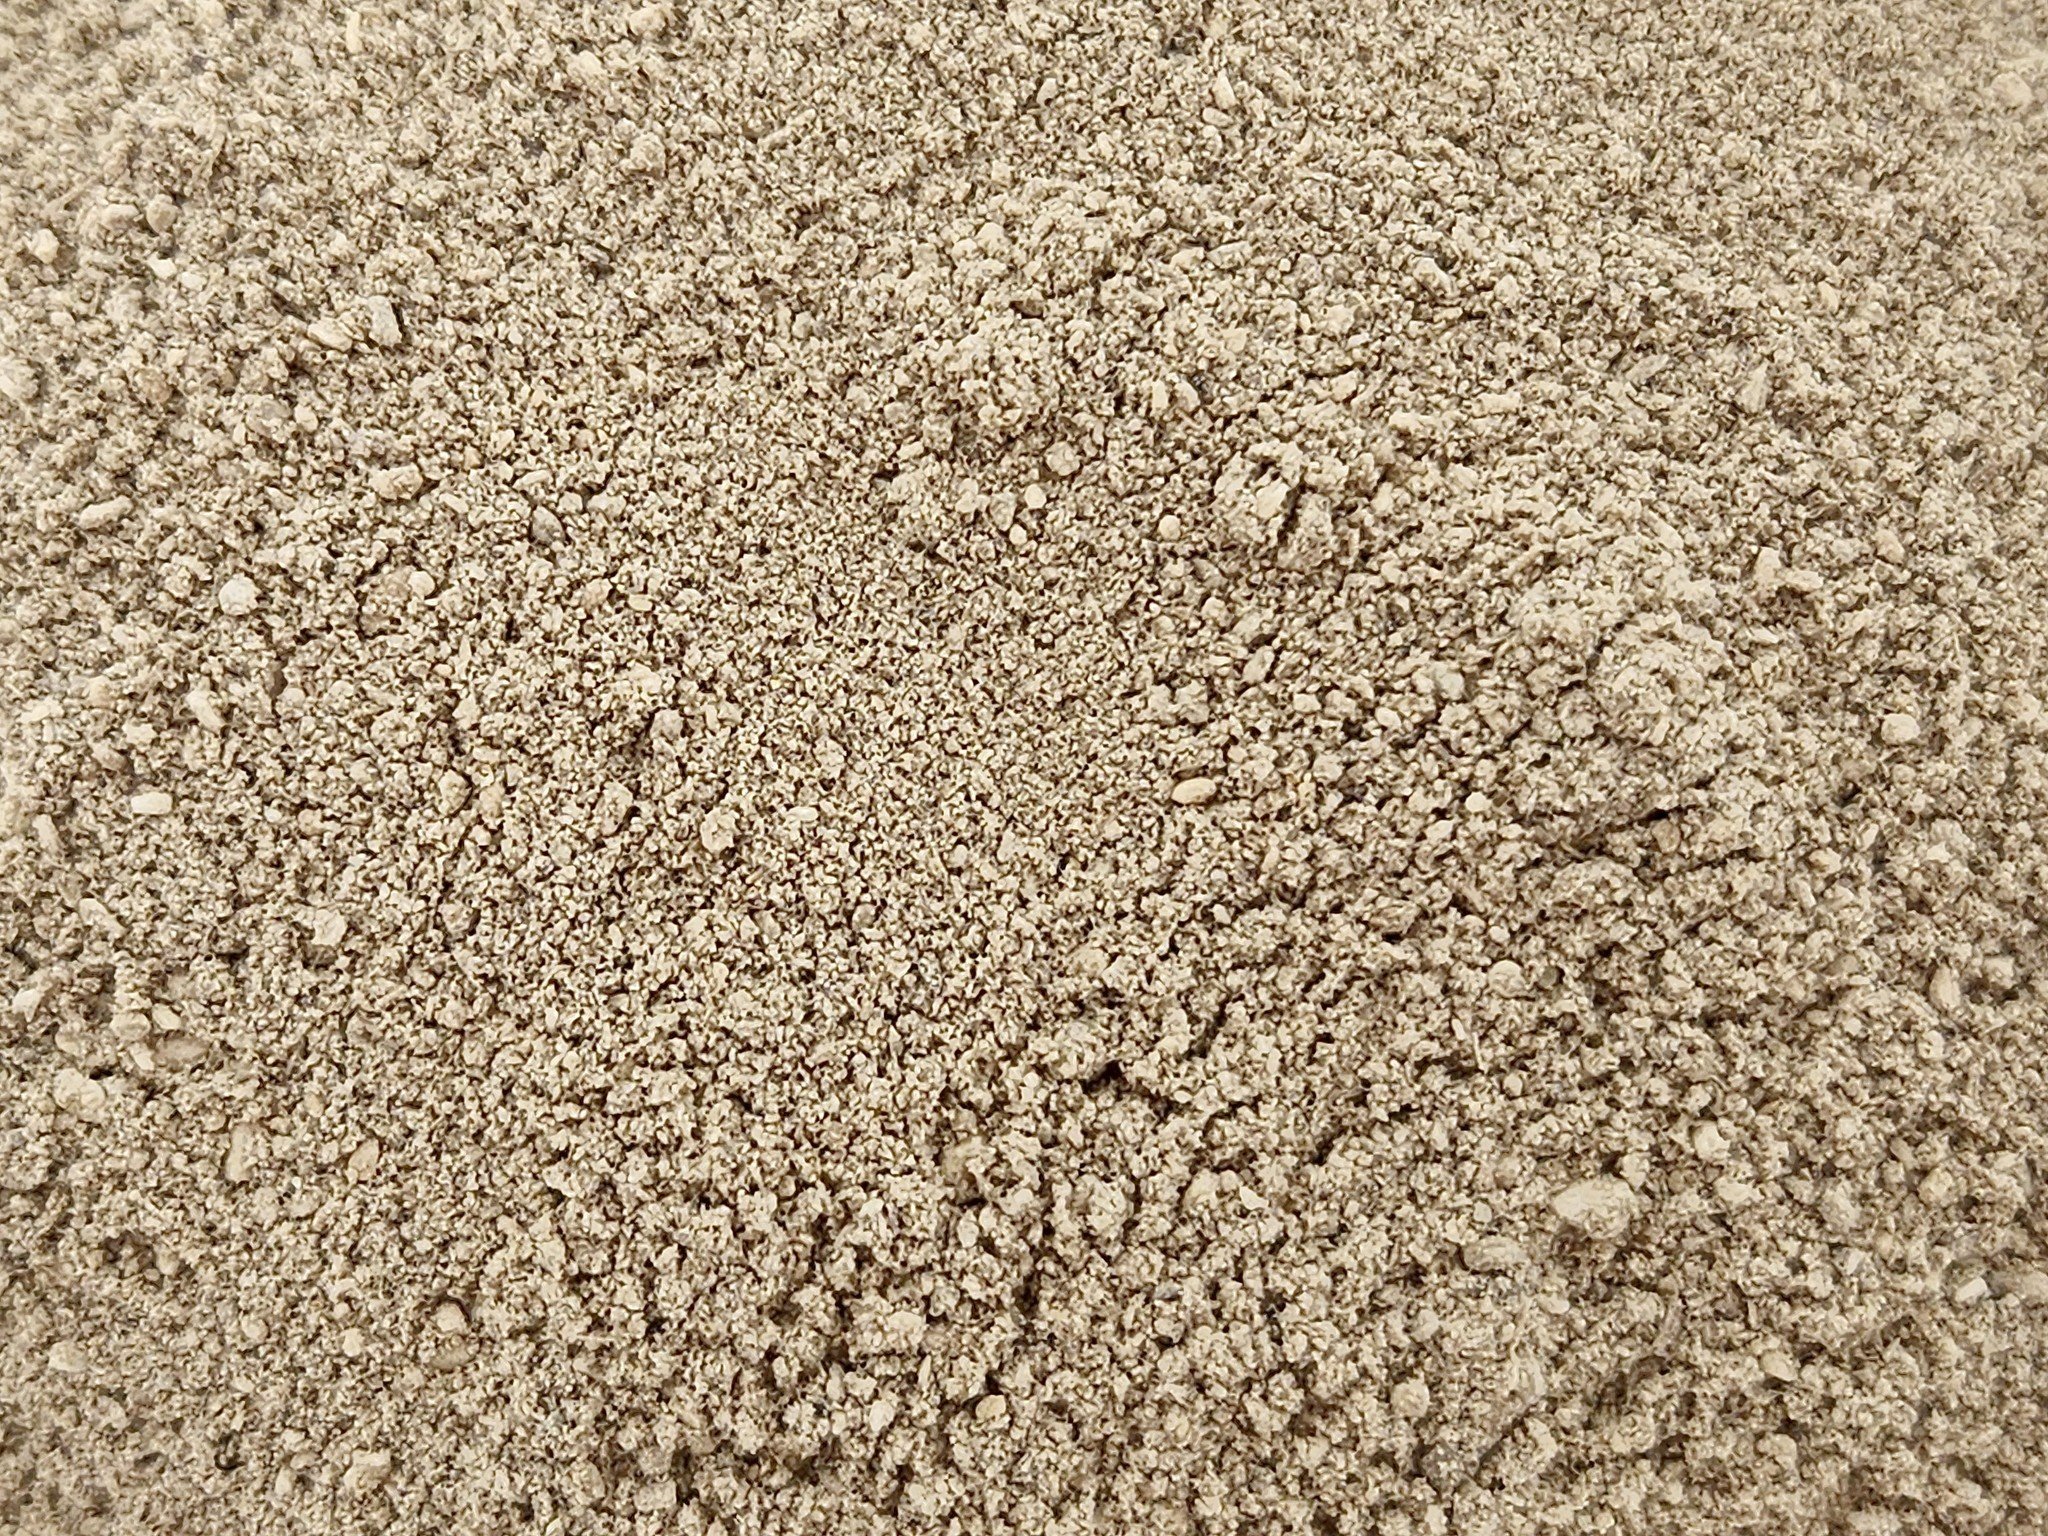 Stone Root (Collinsonia) Powder Bulk